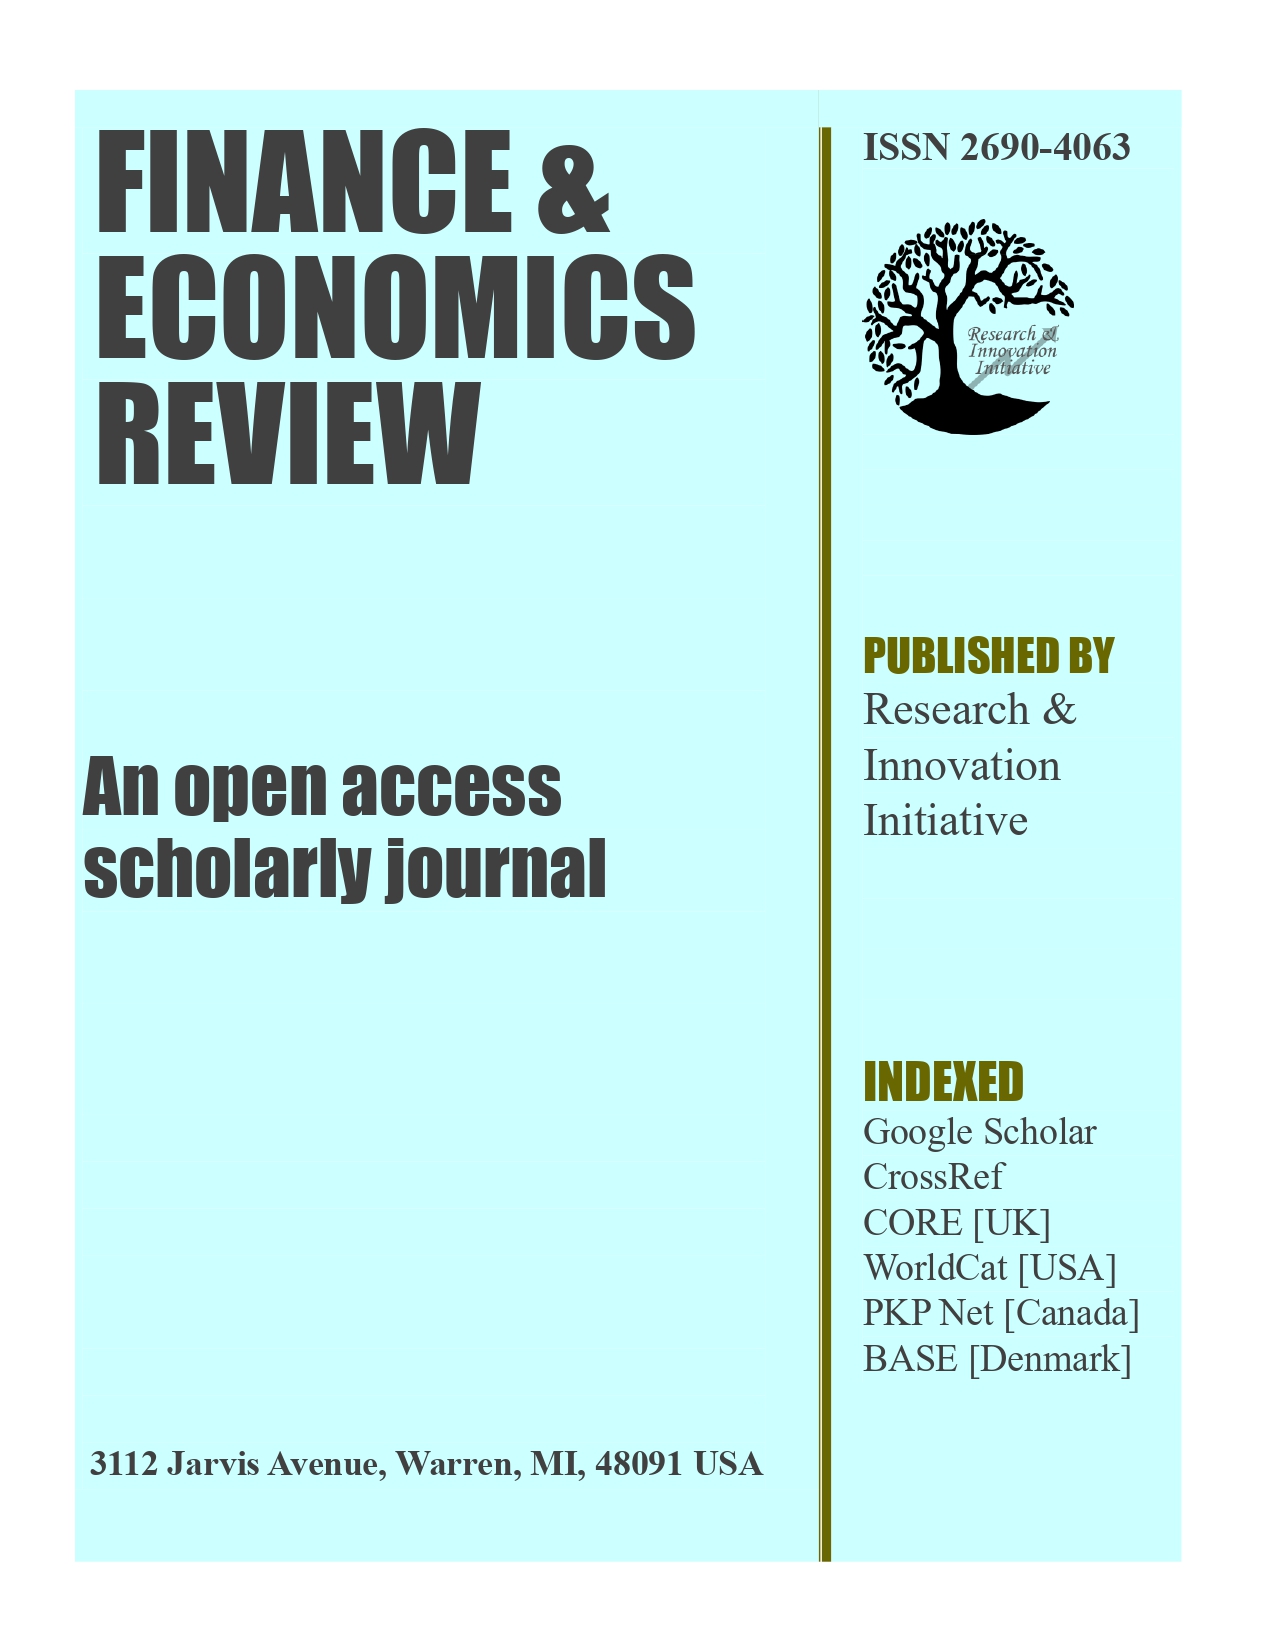 Cover Letter Title Page Finance Economics Review